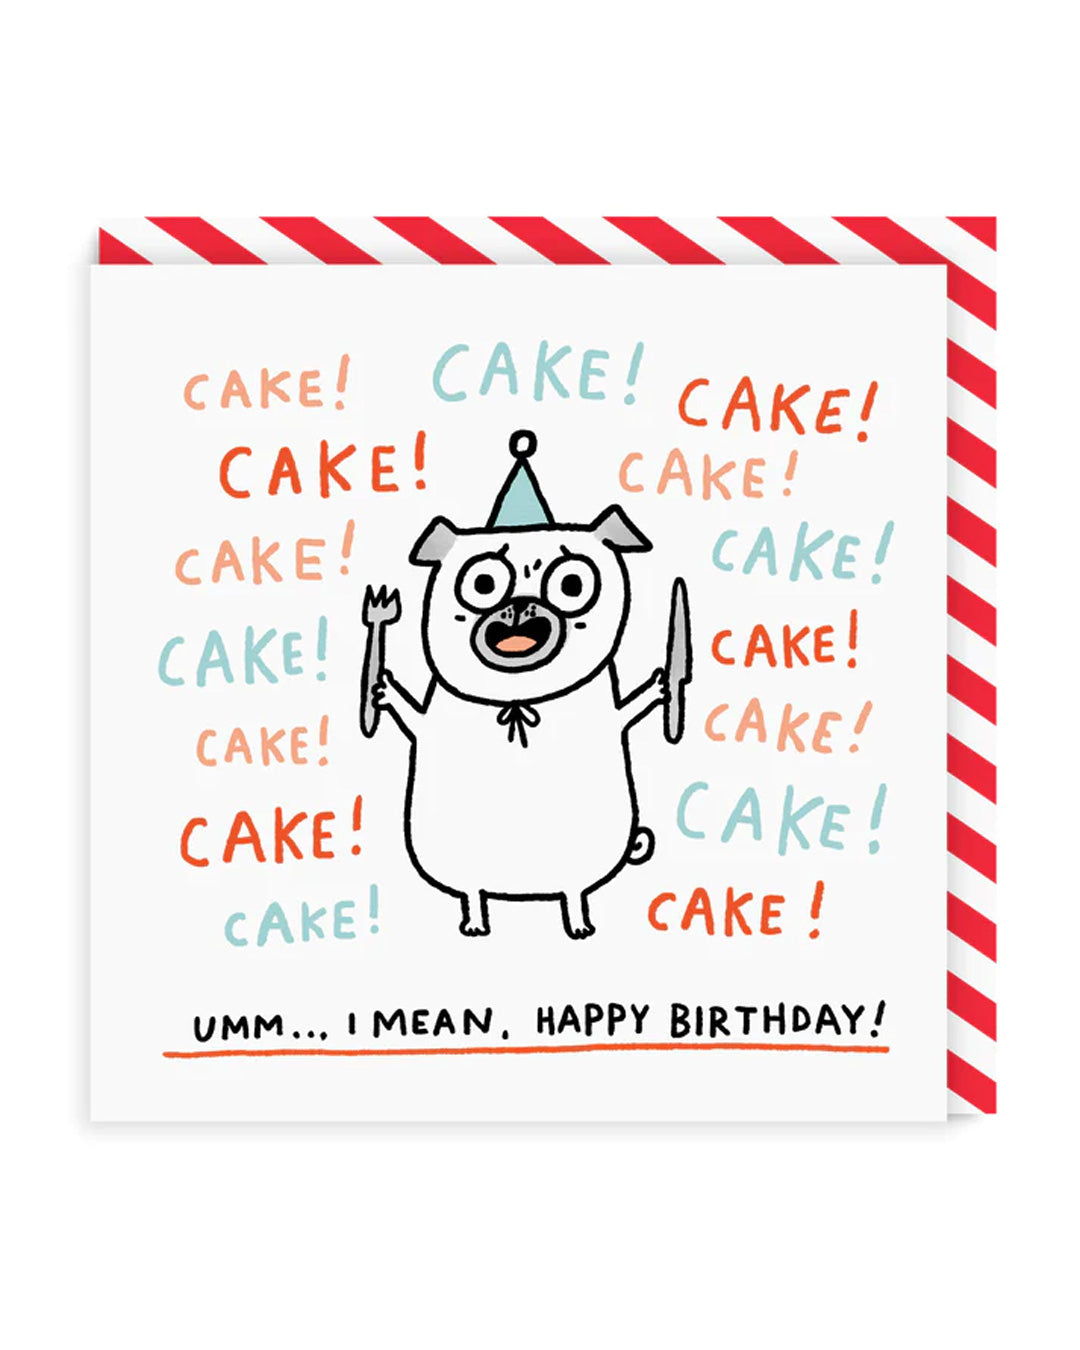 Funny Birthday Card Cake! Cake! Cake! Square Birthday Card